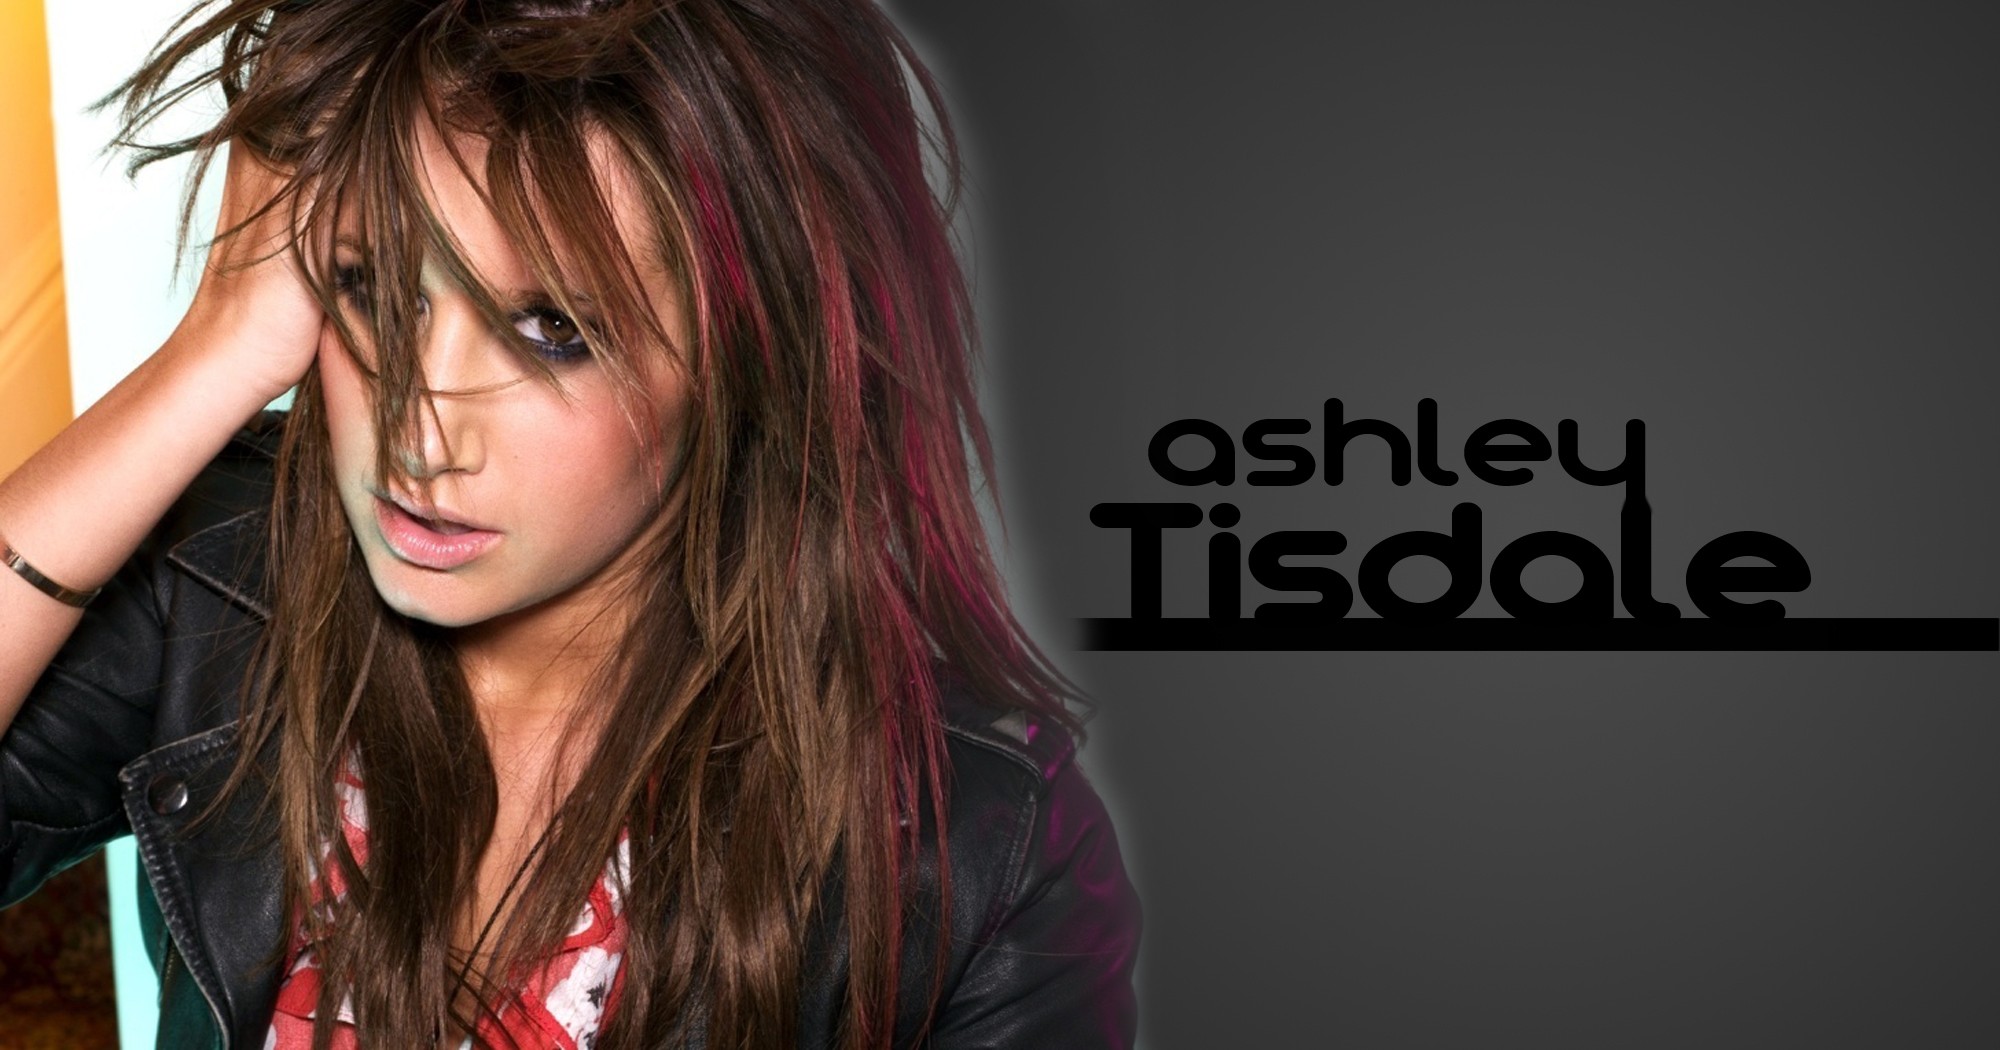  Ashley Tisdale Full HD Wallpaper